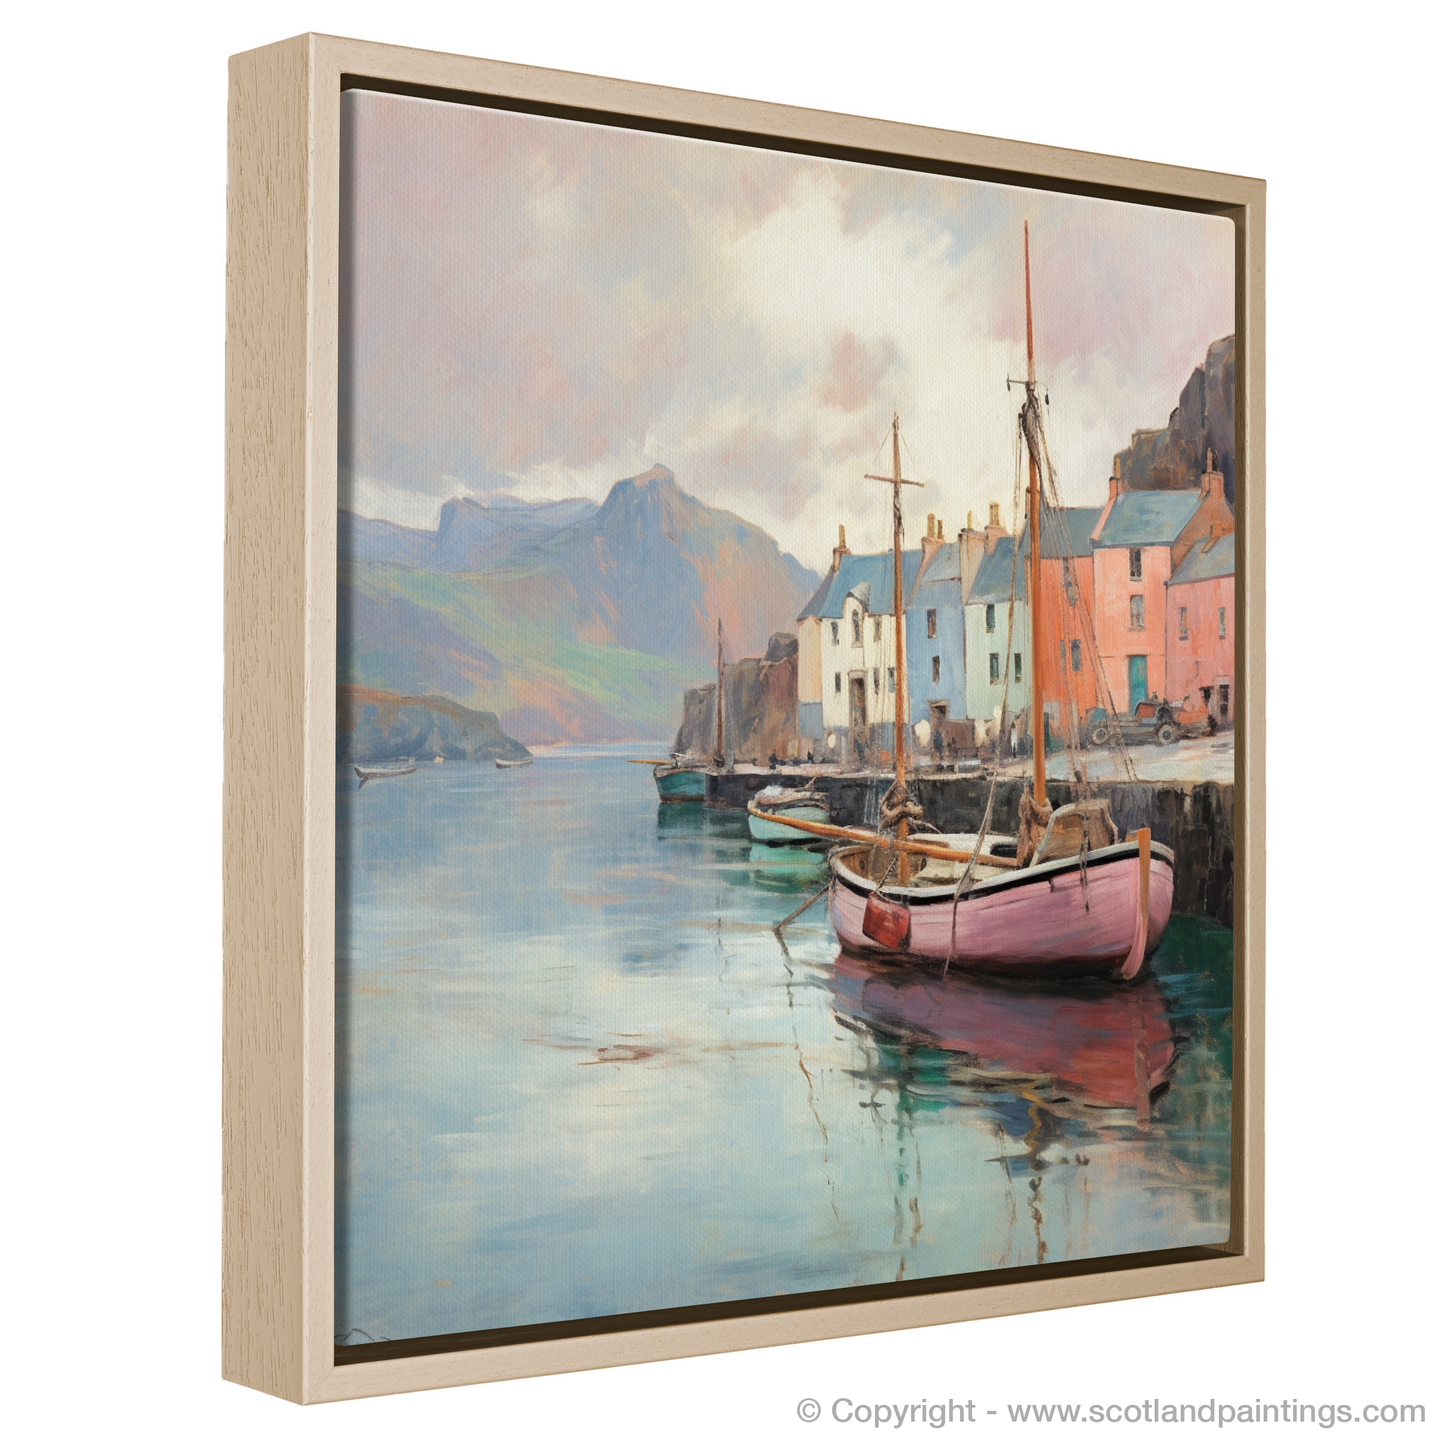 Serene Portree Harbour: An Impressionist Tribute to Scottish Coastal Life